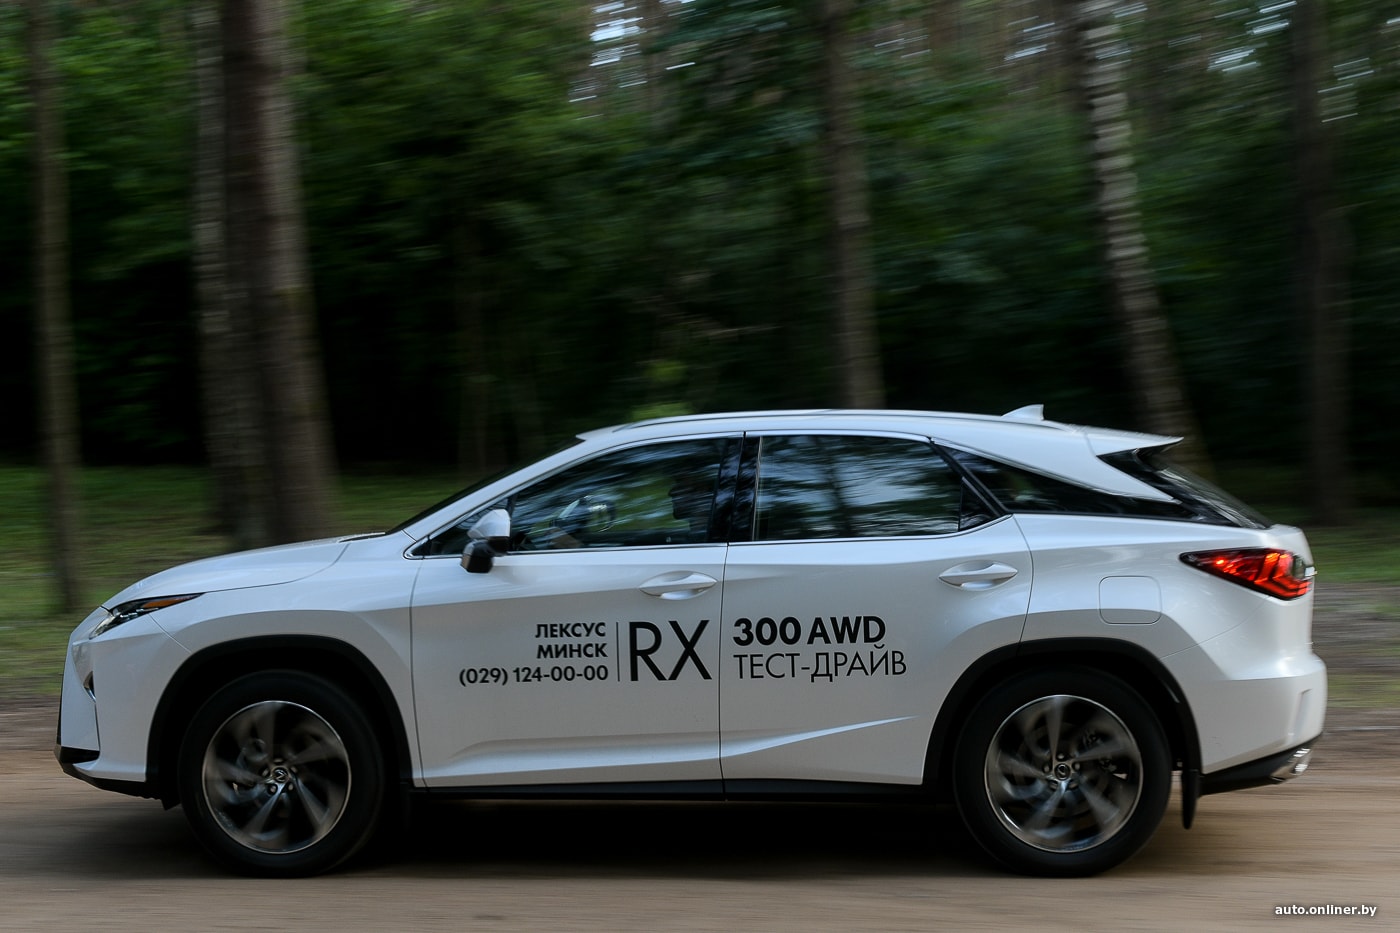 Тест драйв рх. Лексус rx300 AWD. Lexus RX 300 AWD. Lexus rx300 AWD Premium. Лексус за 300к.